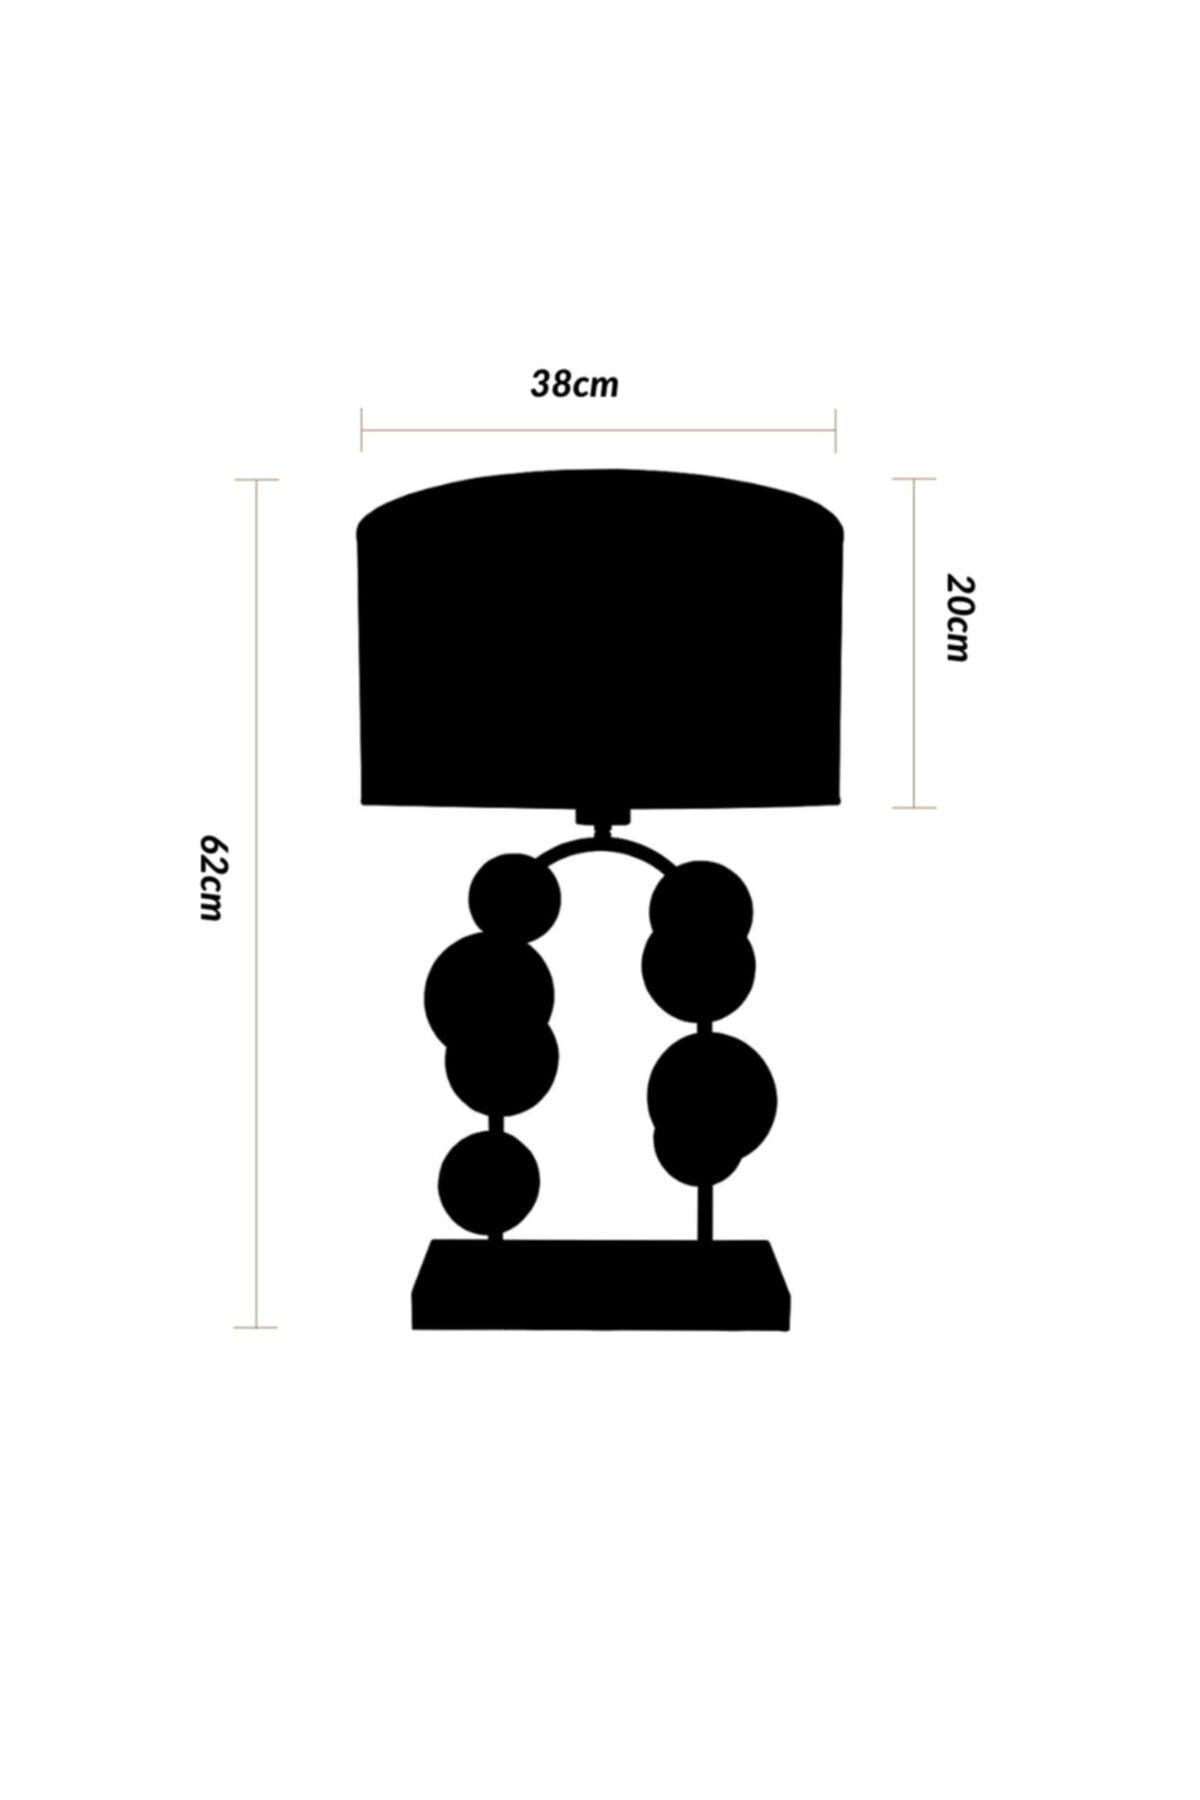 Large Lampshade, Table Lamp - Ball Chrome (cream) - Swordslife